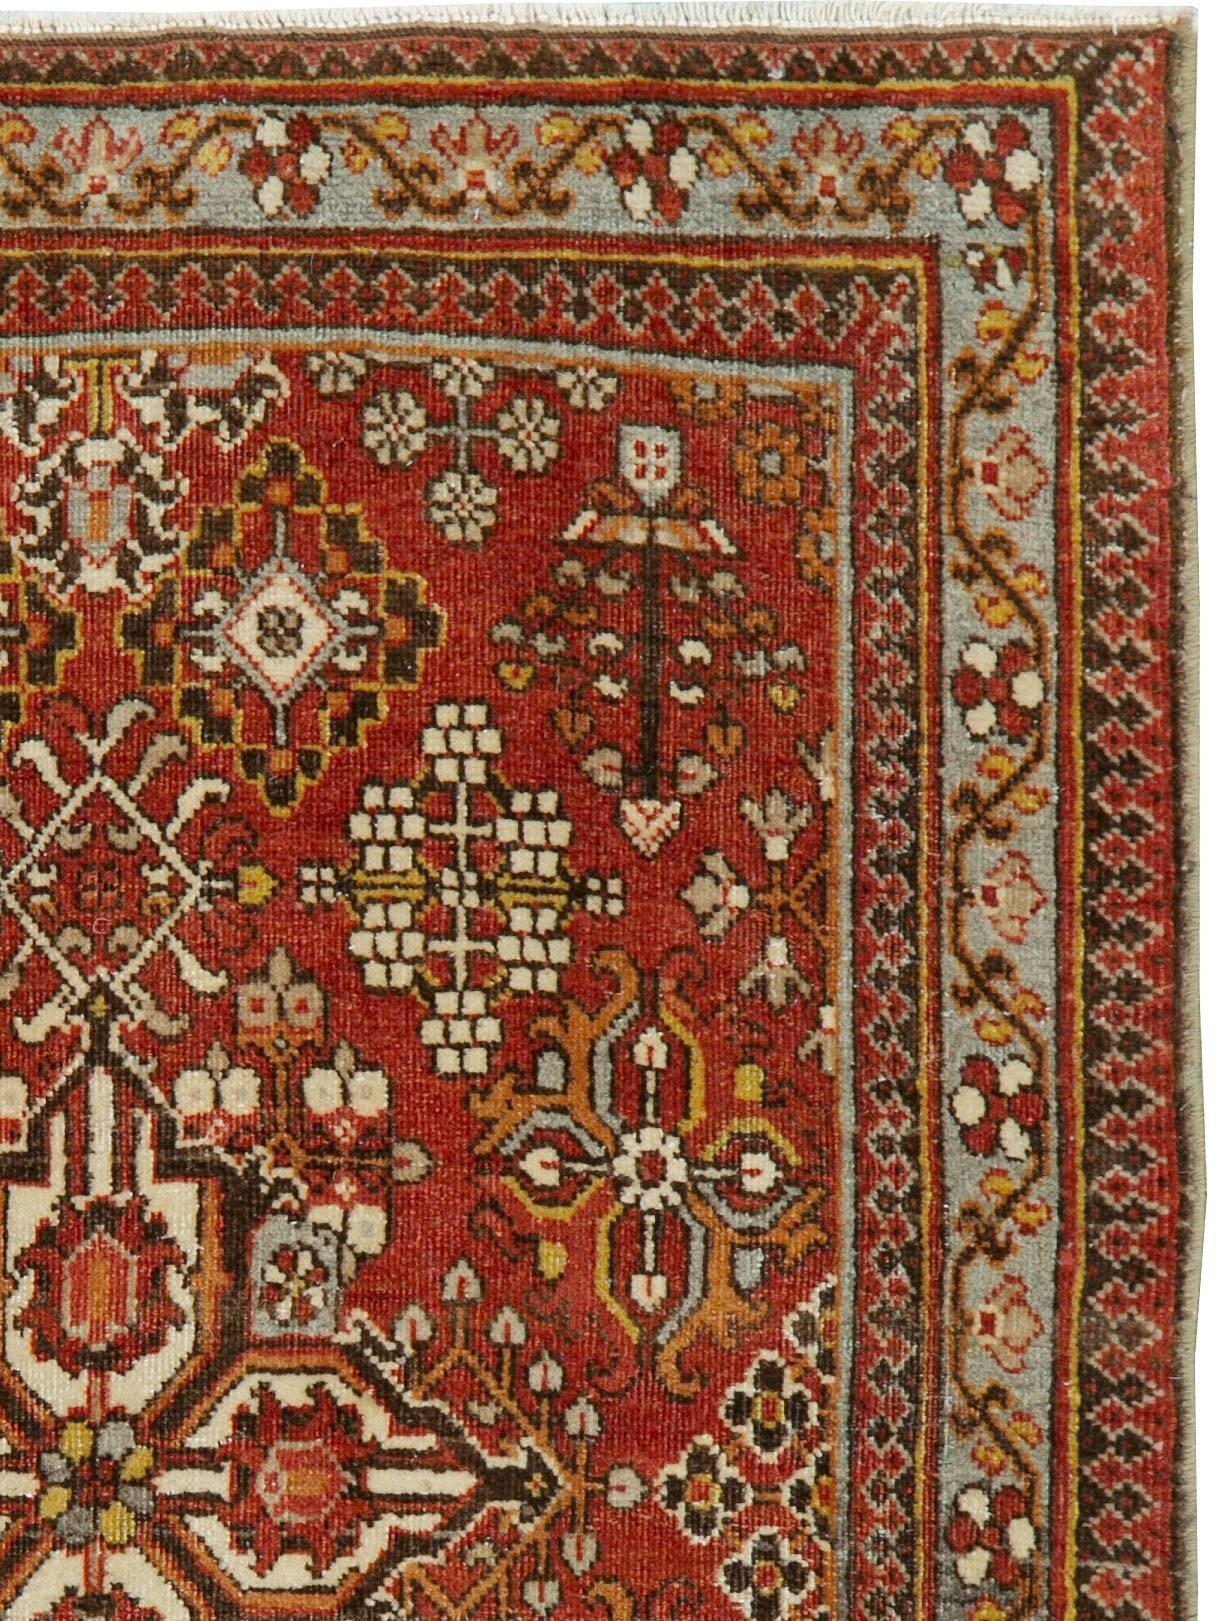 Un ancien tapis persan Joshegan du début du 20e siècle.

Mesures : 2' 0